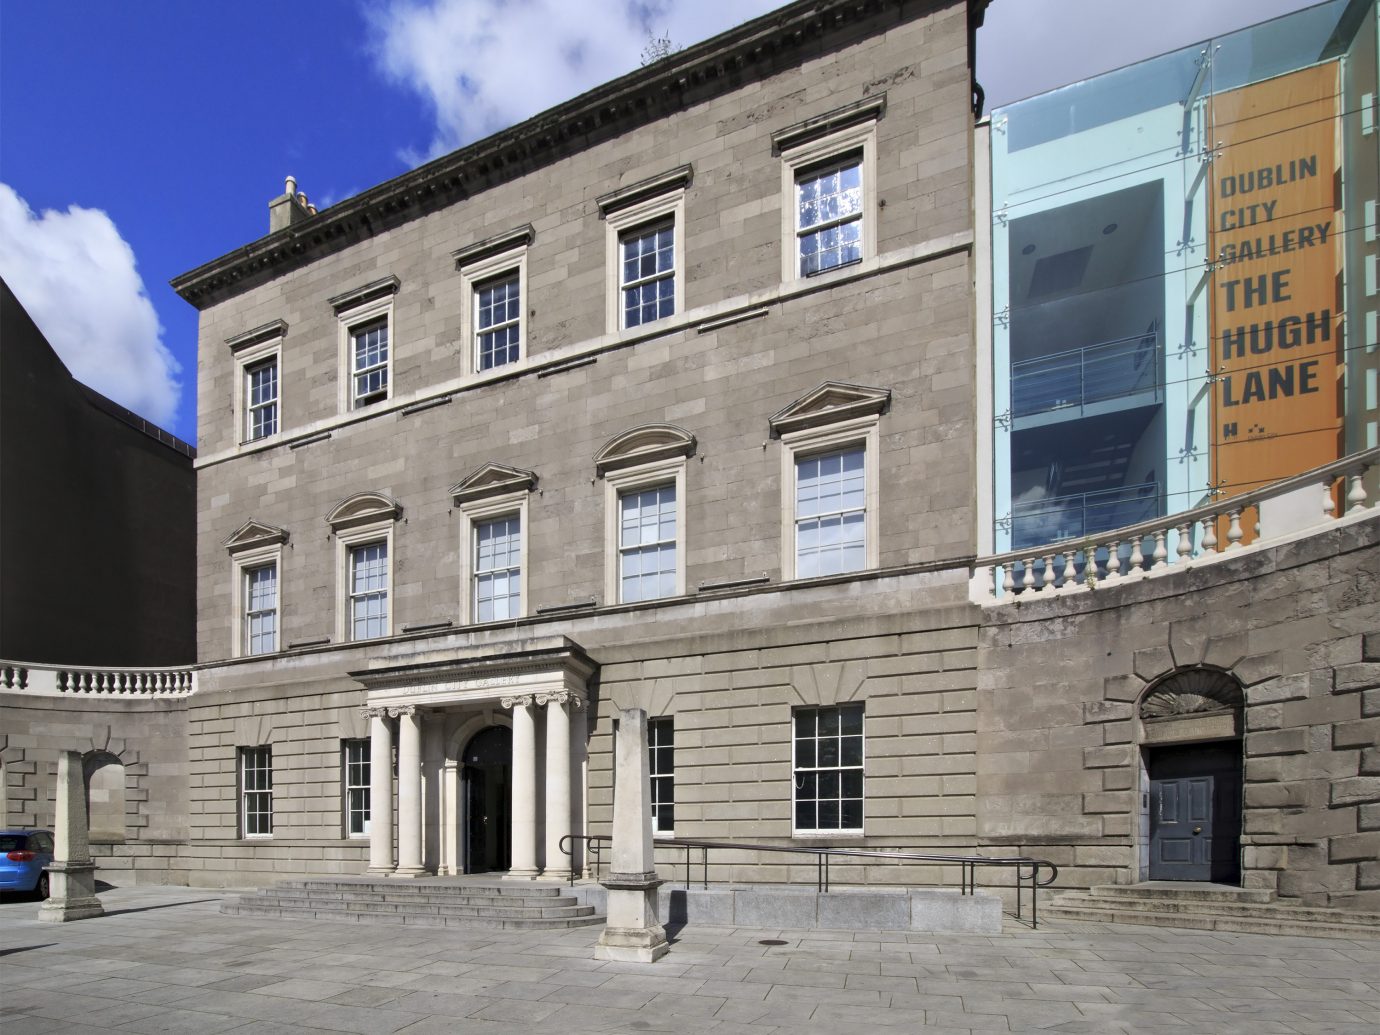 Dublin City Gallery. The Hugh Lane